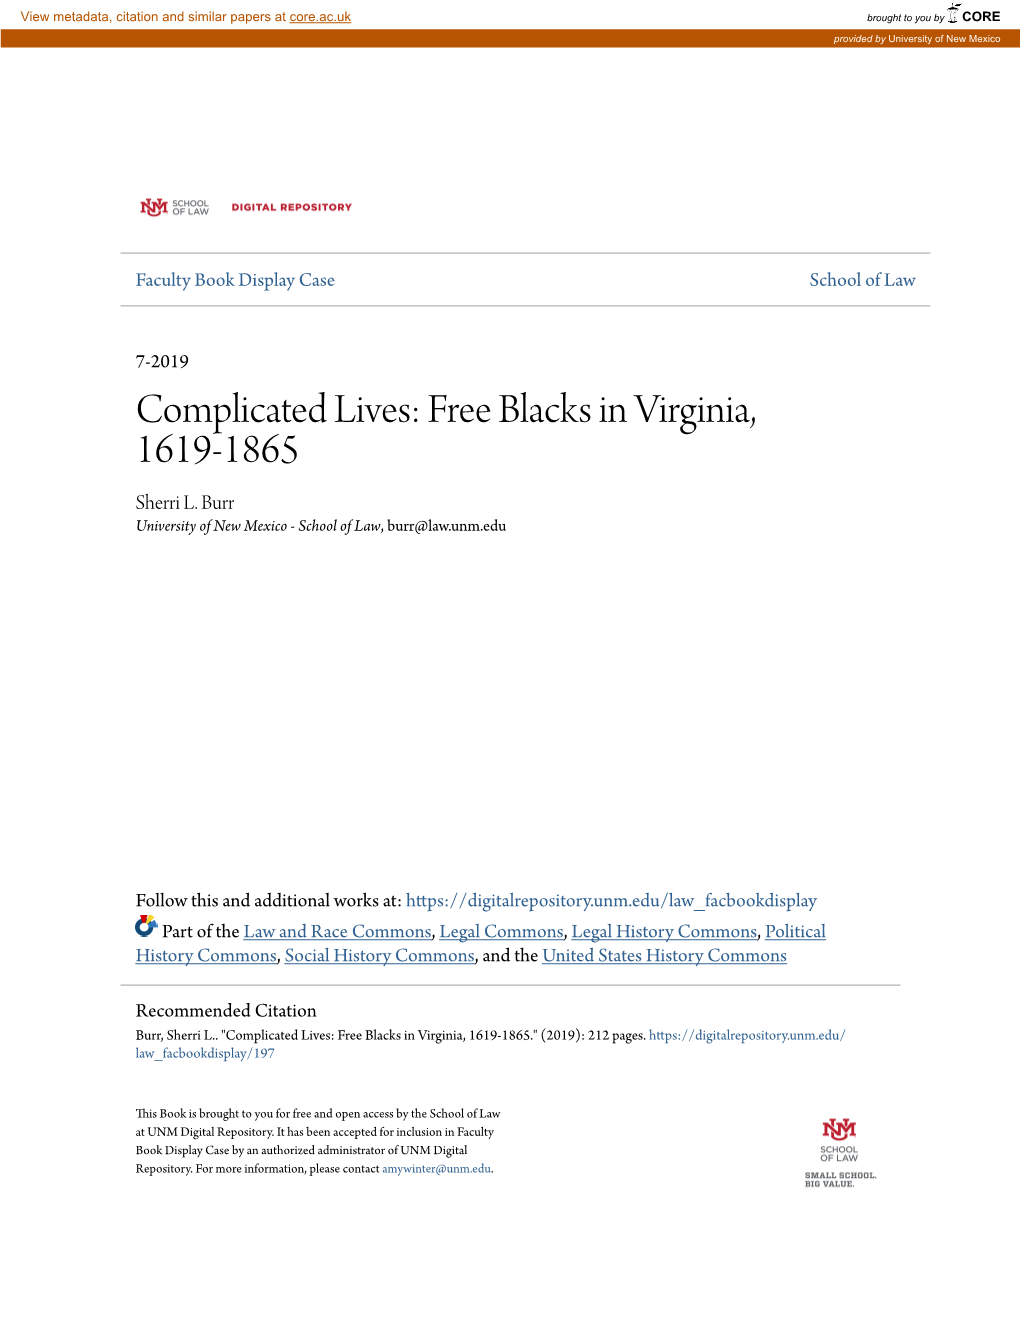 Complicated Lives: Free Blacks in Virginia, 1619-1865 Sherri L